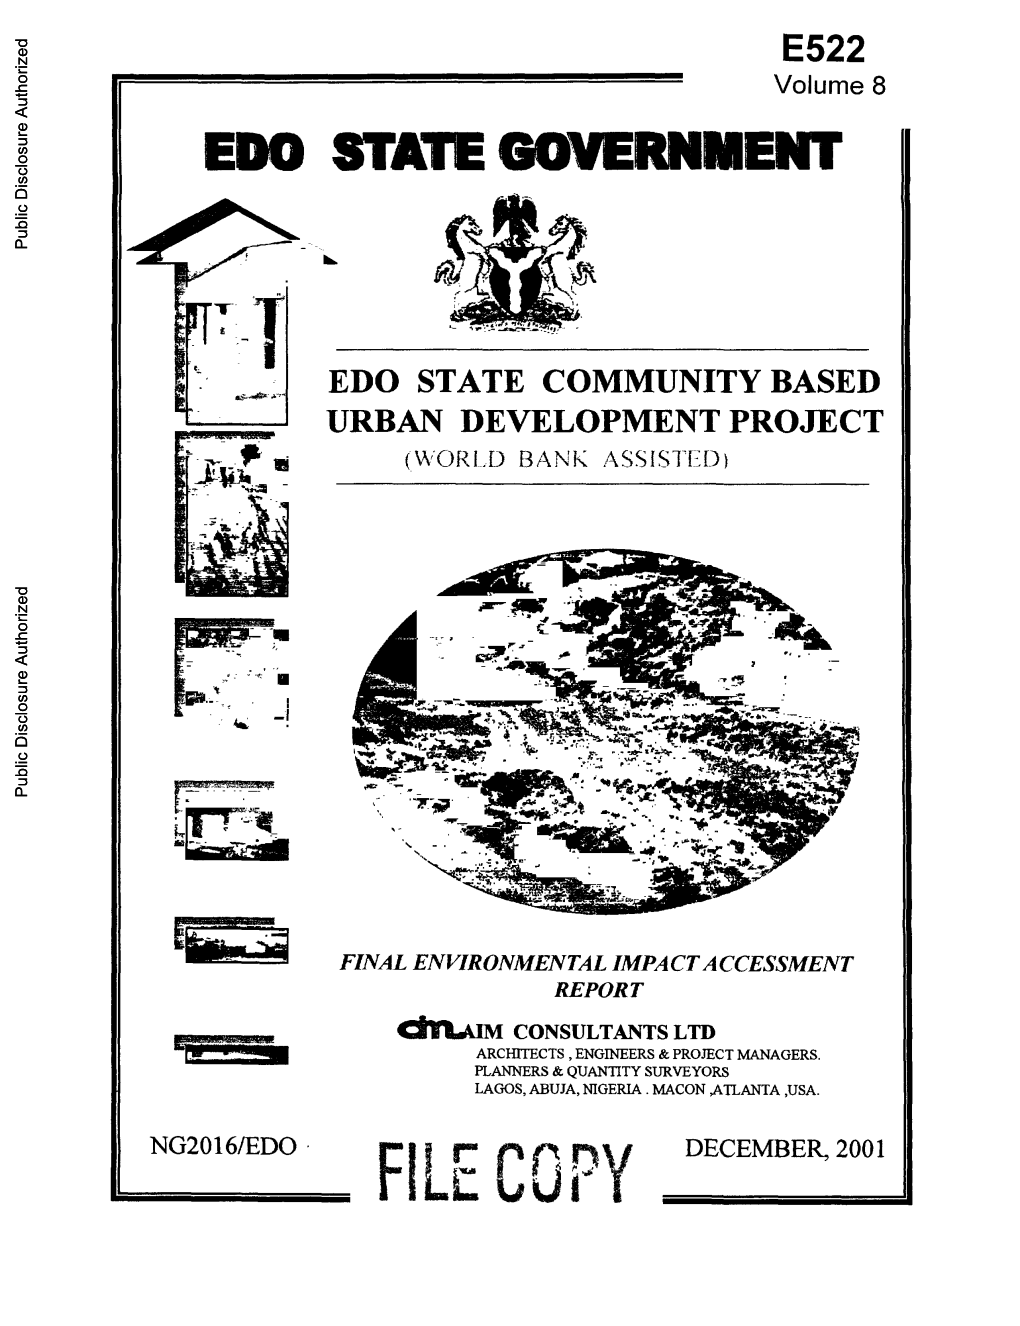 EDO STATE GOVERNMENT Public Disclosure Authorized